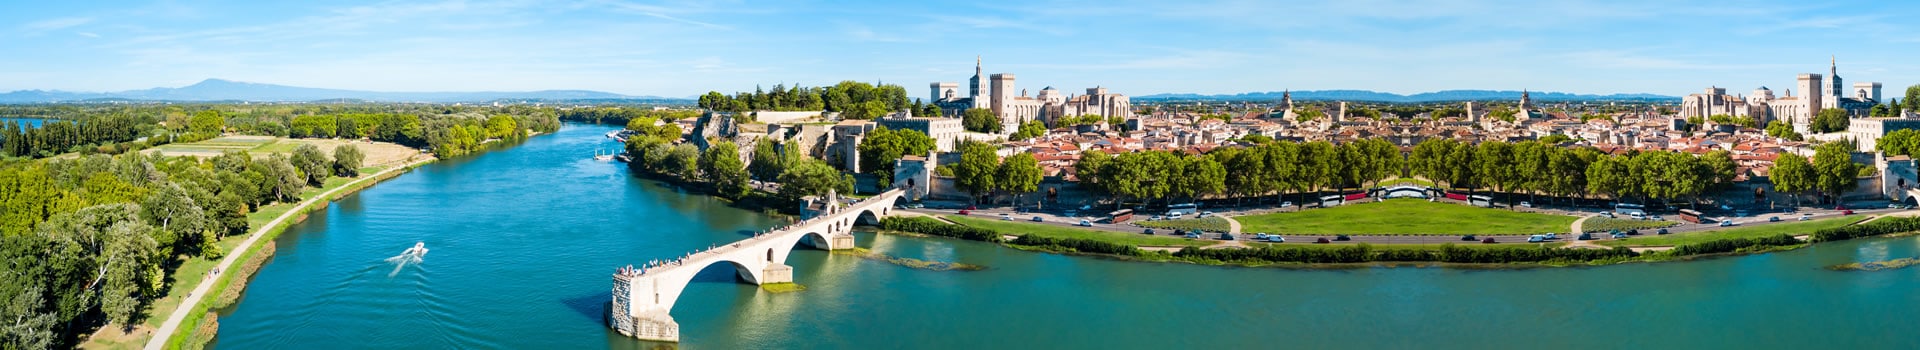 Porto - Avignon